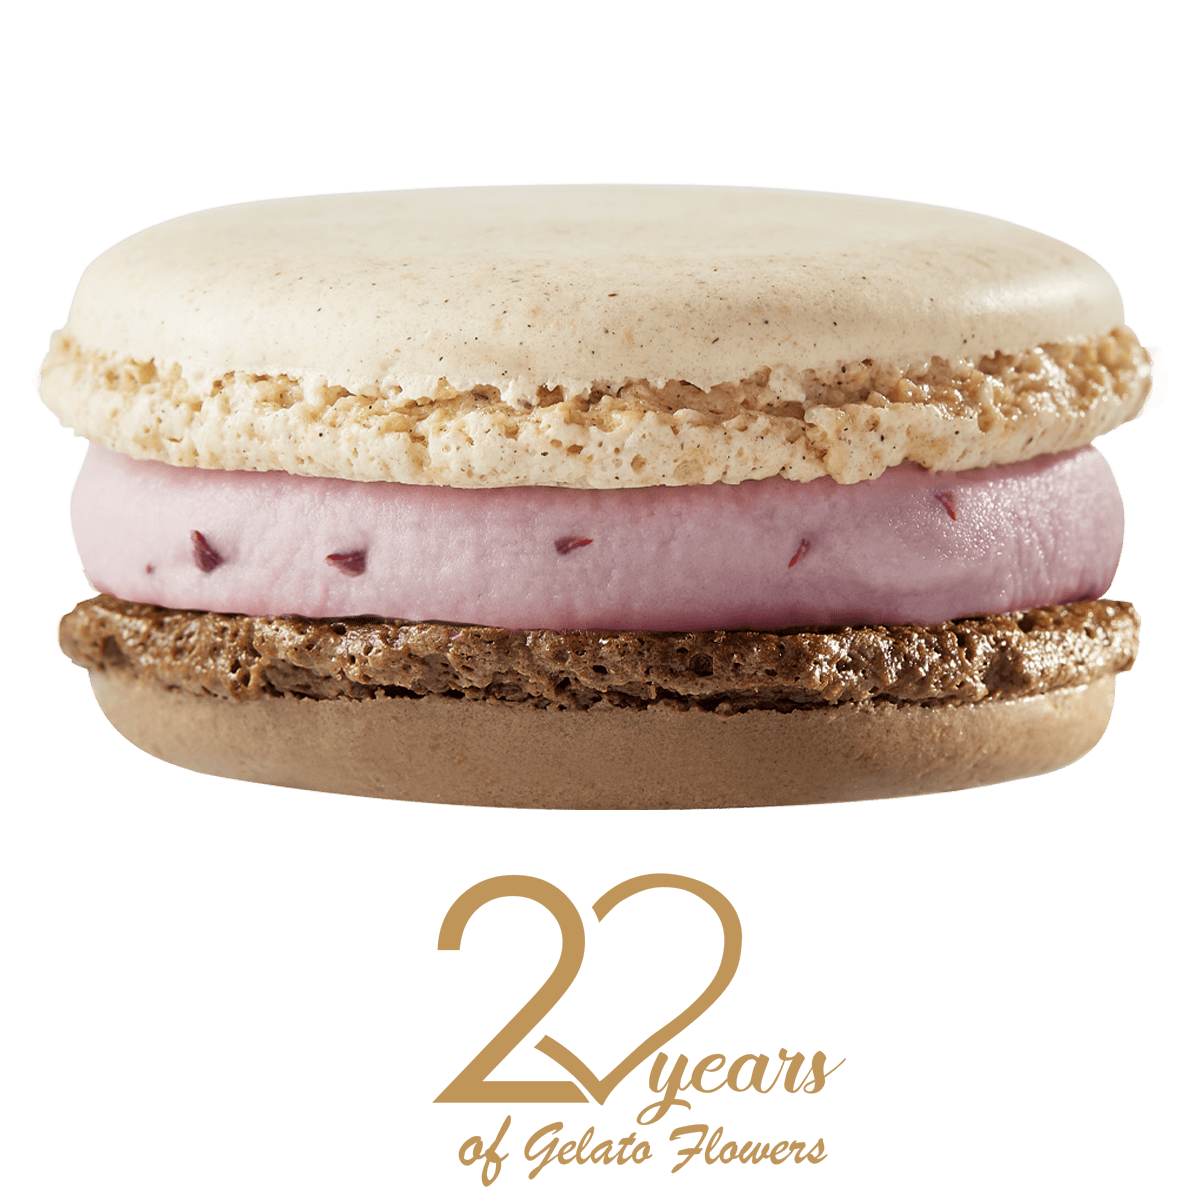 Grandioso macaron and Amorino 20th anniversary logo